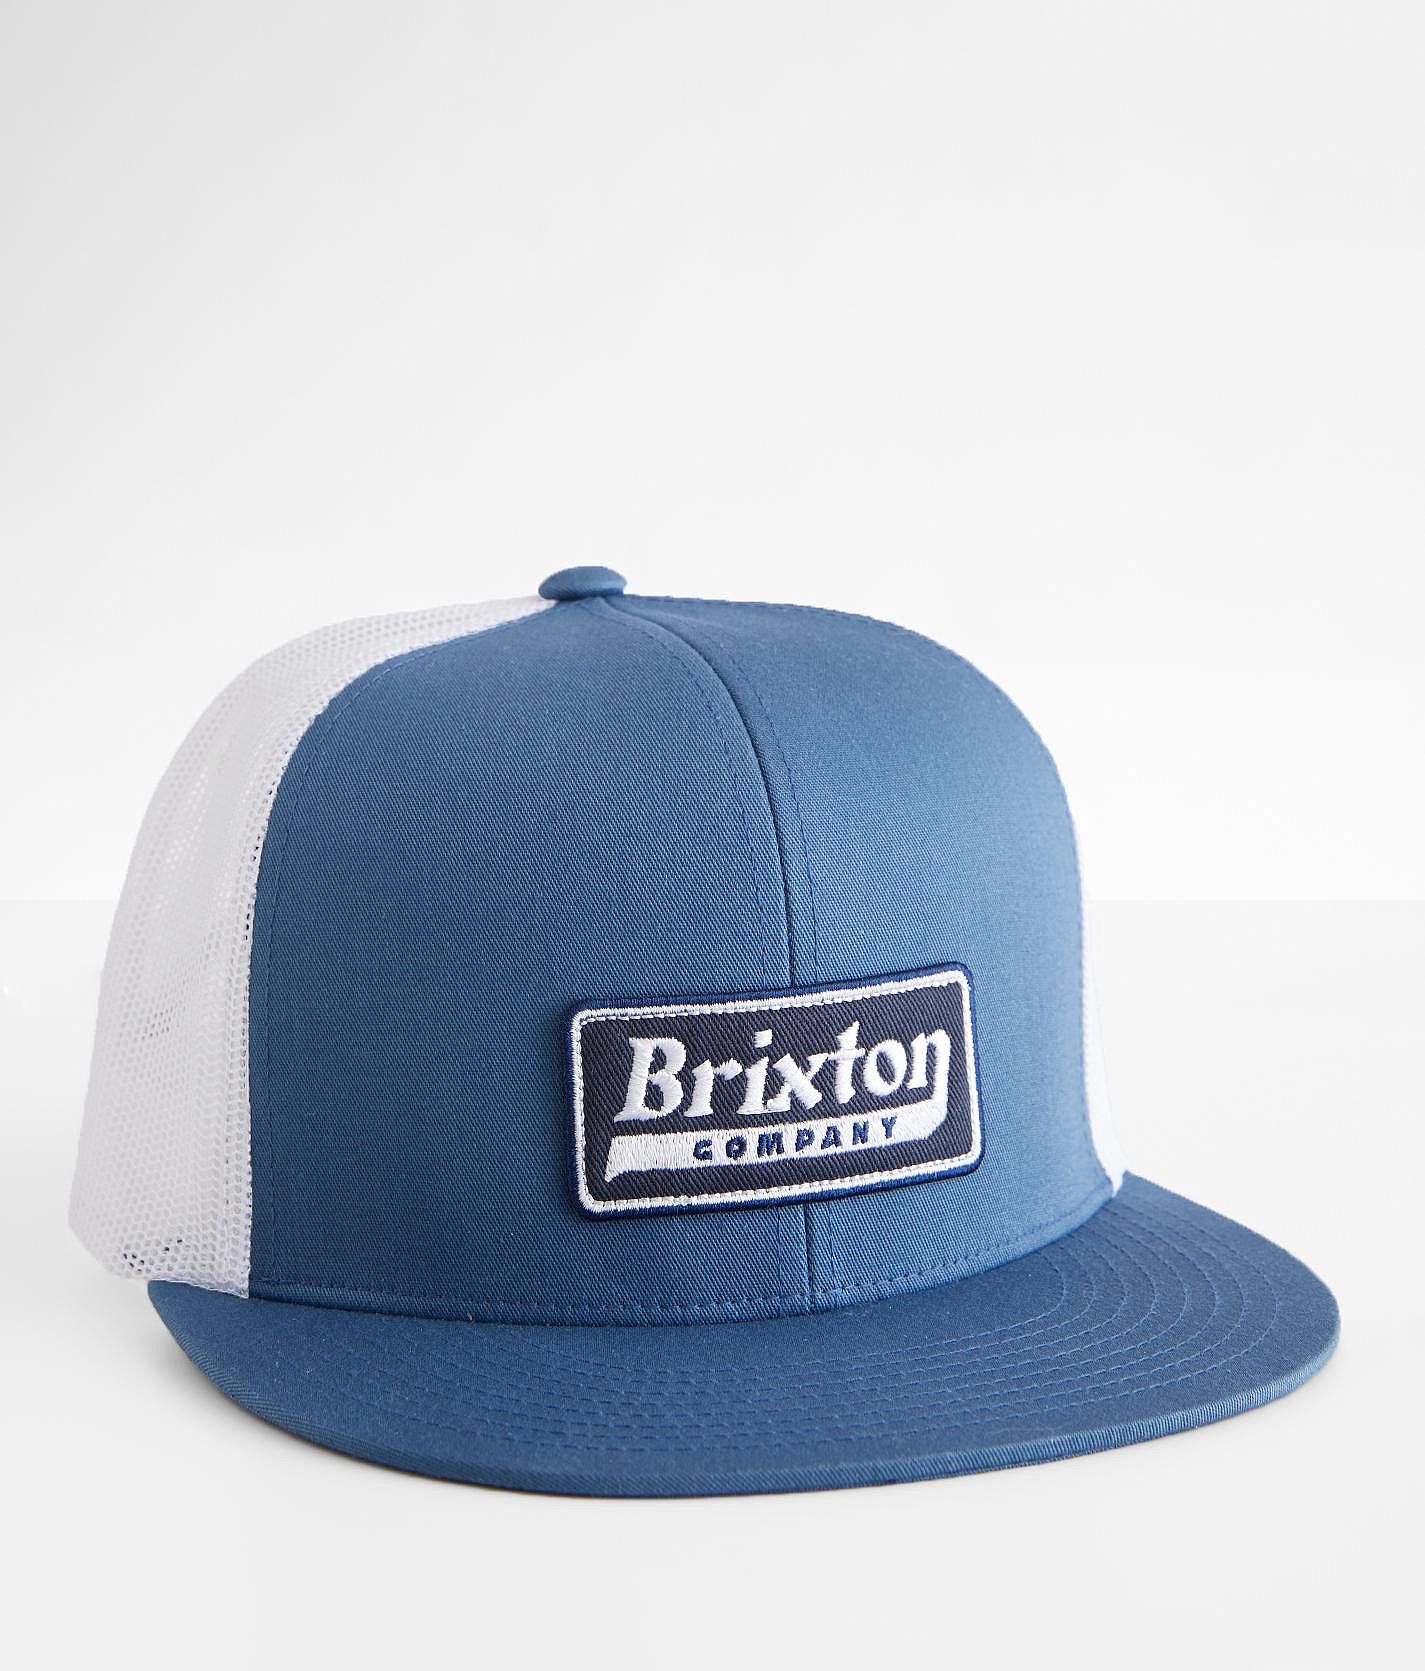 Brixton Steadfast Trucker Hat - Men's Hats in Pacific Blue White | Buckle